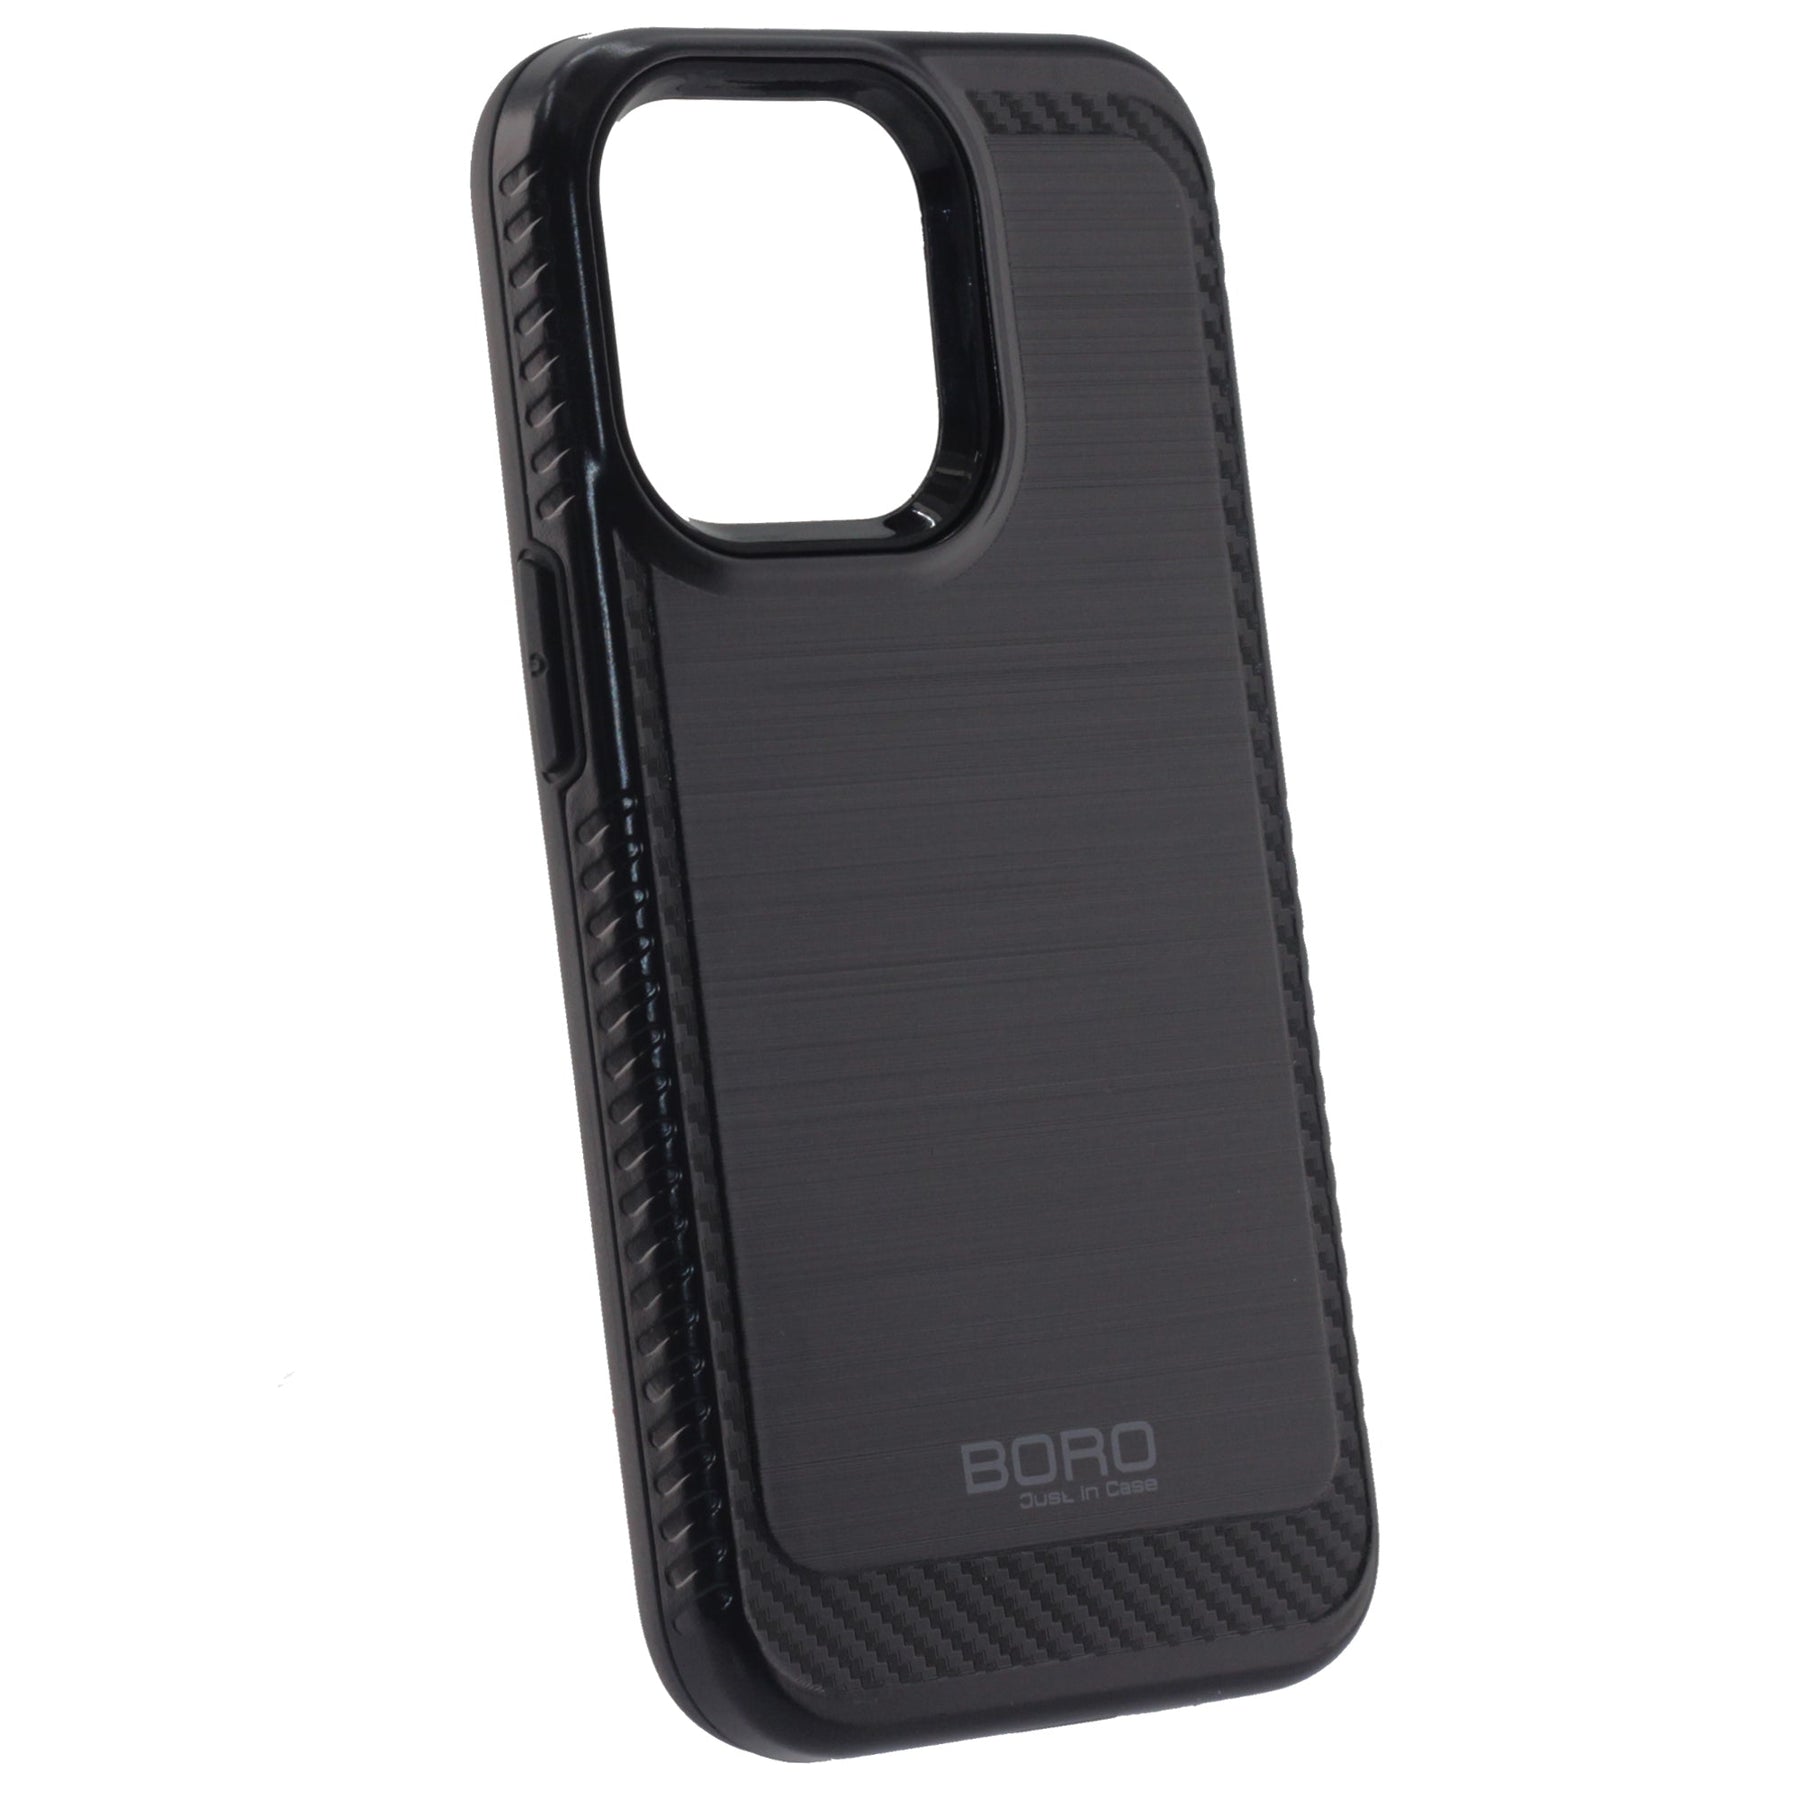 BORO Case For Apple iPhone 11, Slim Armor Case, Color Black